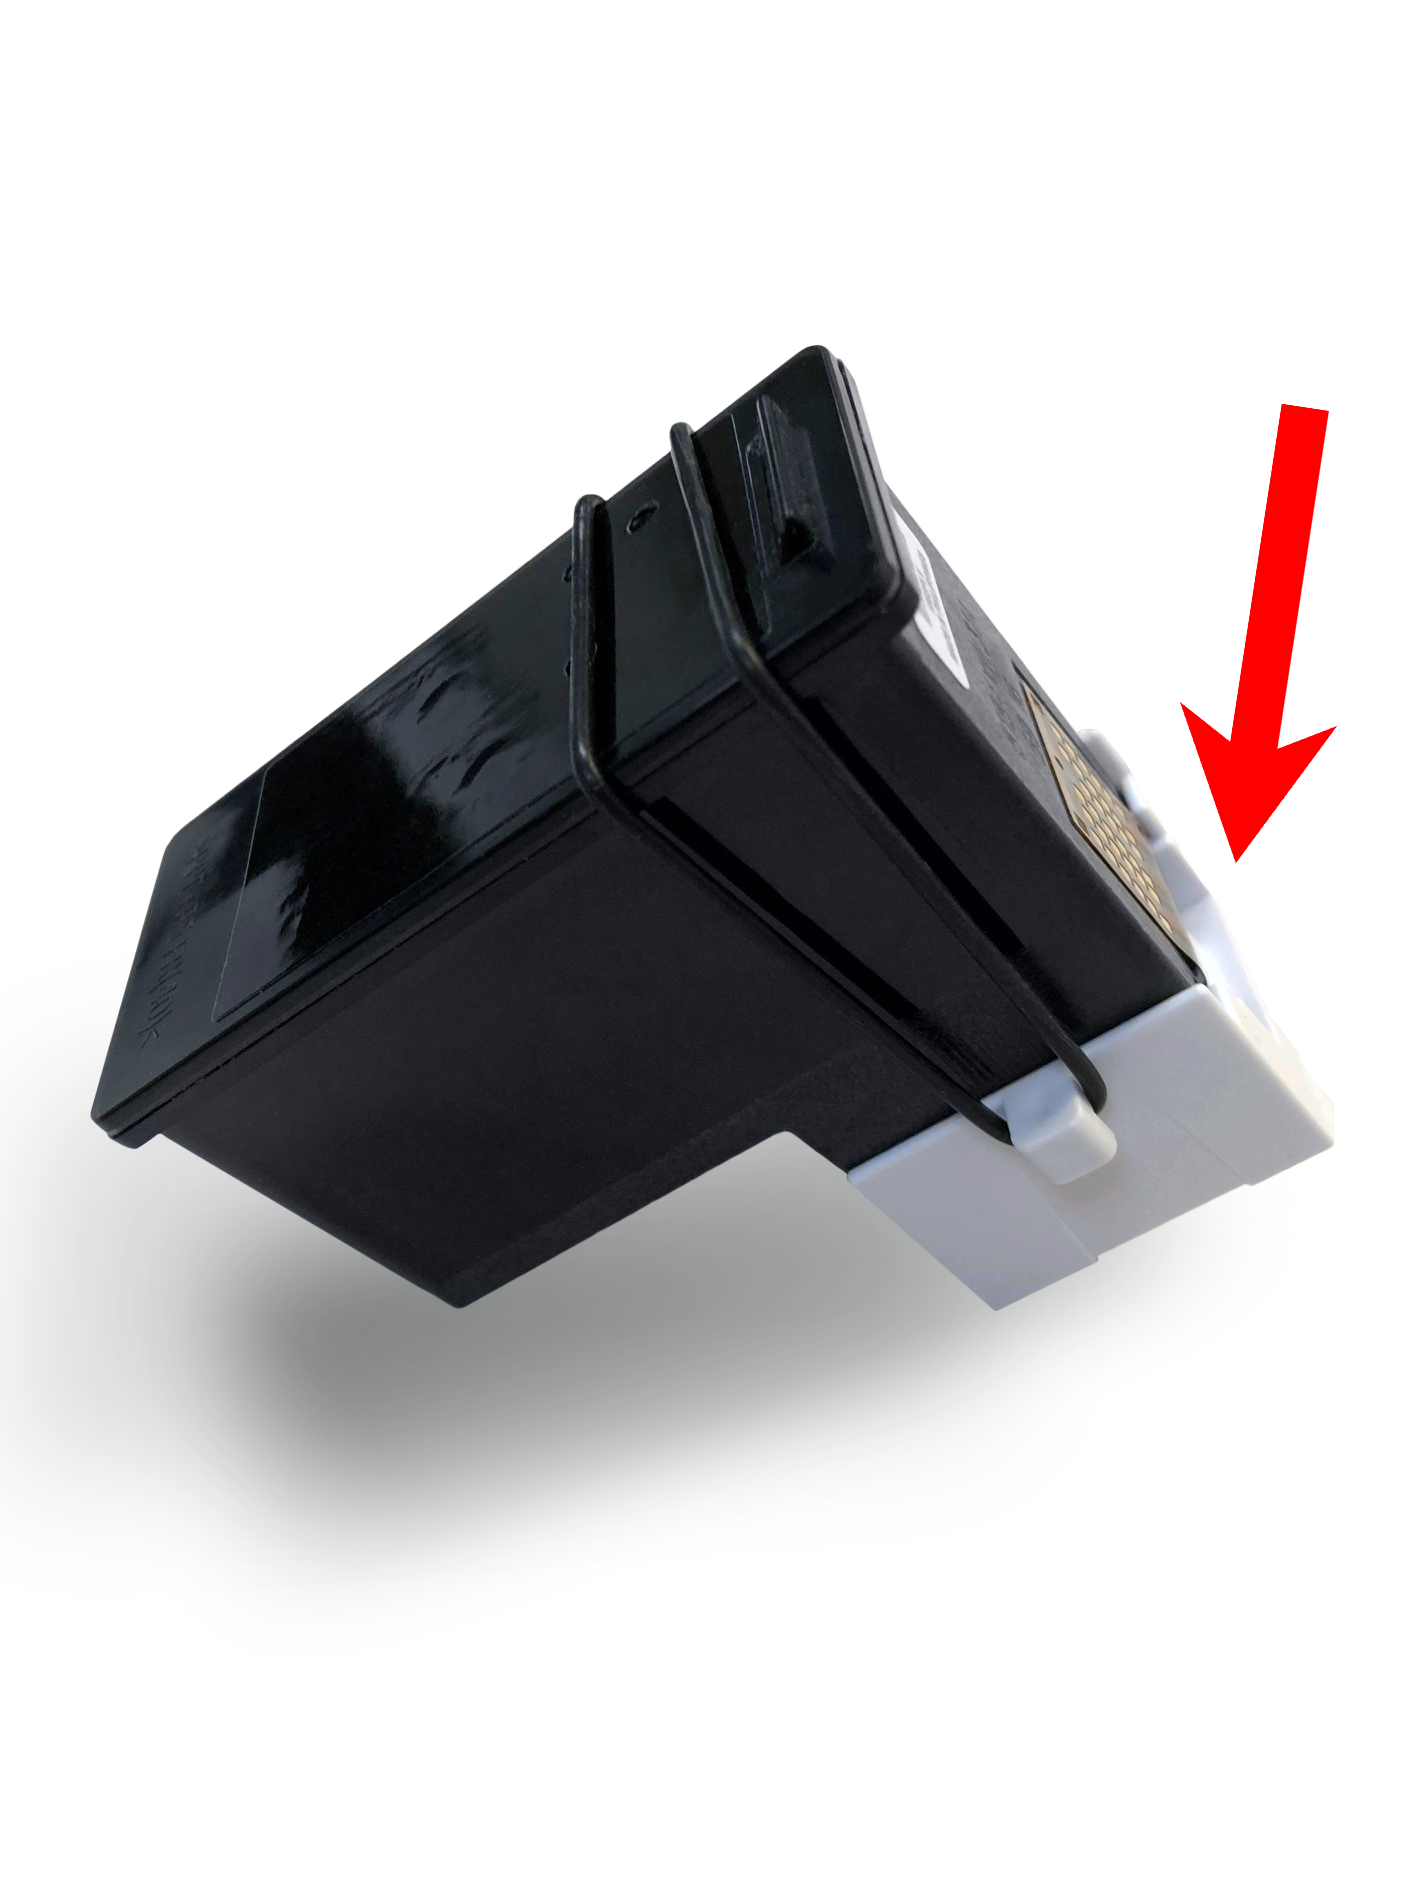 Primera Renkli Mürekkep Kartuşu Garajı için LX600/lX610/LX910/IP60 (2-Paket) resmi